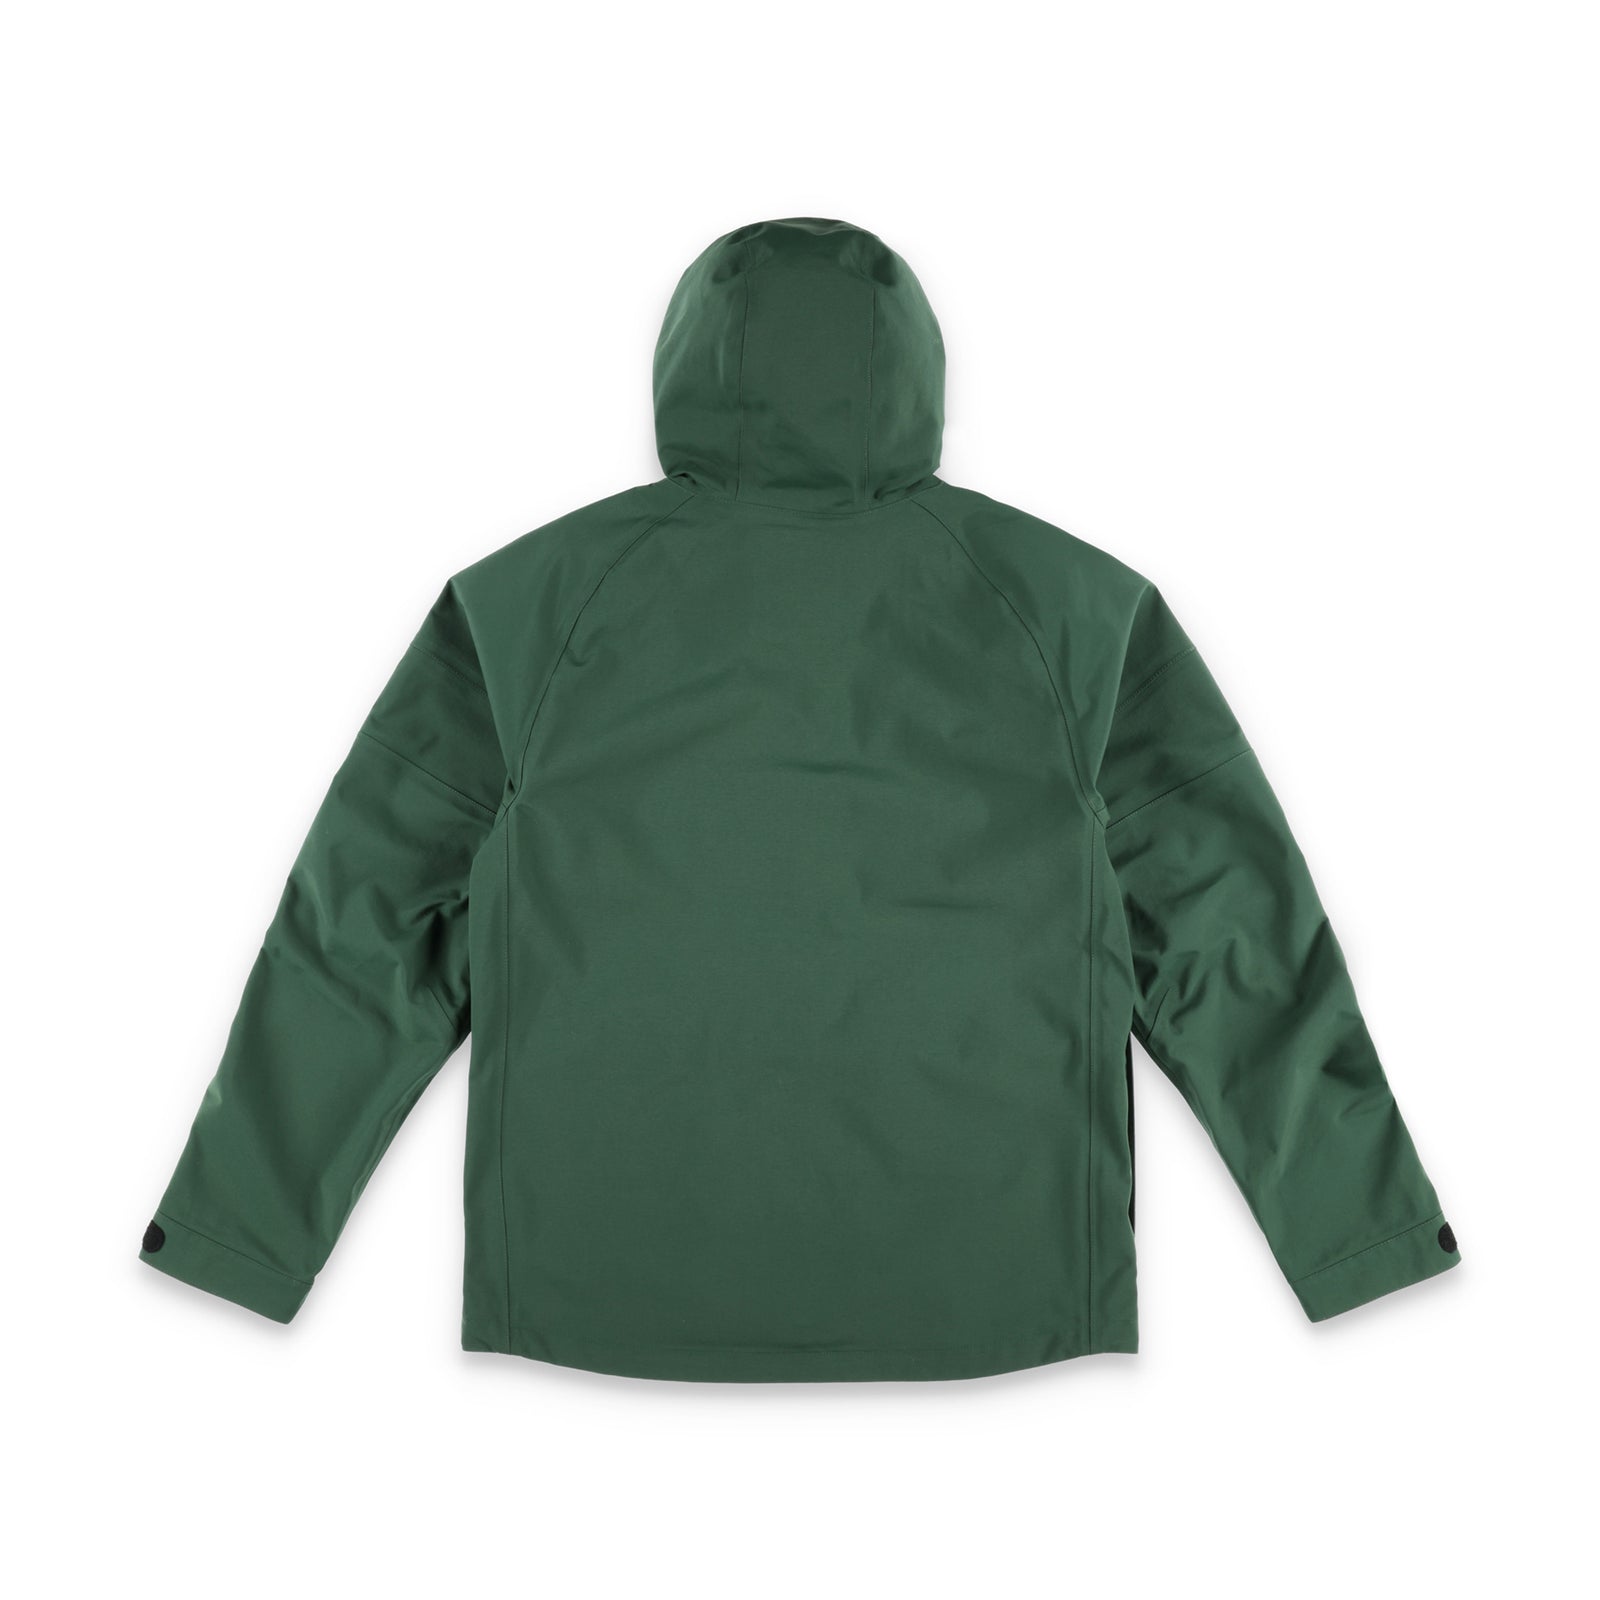 Back of Topo Designs Men's Mountain Parka waterproof shell jacket in "Forest" green.